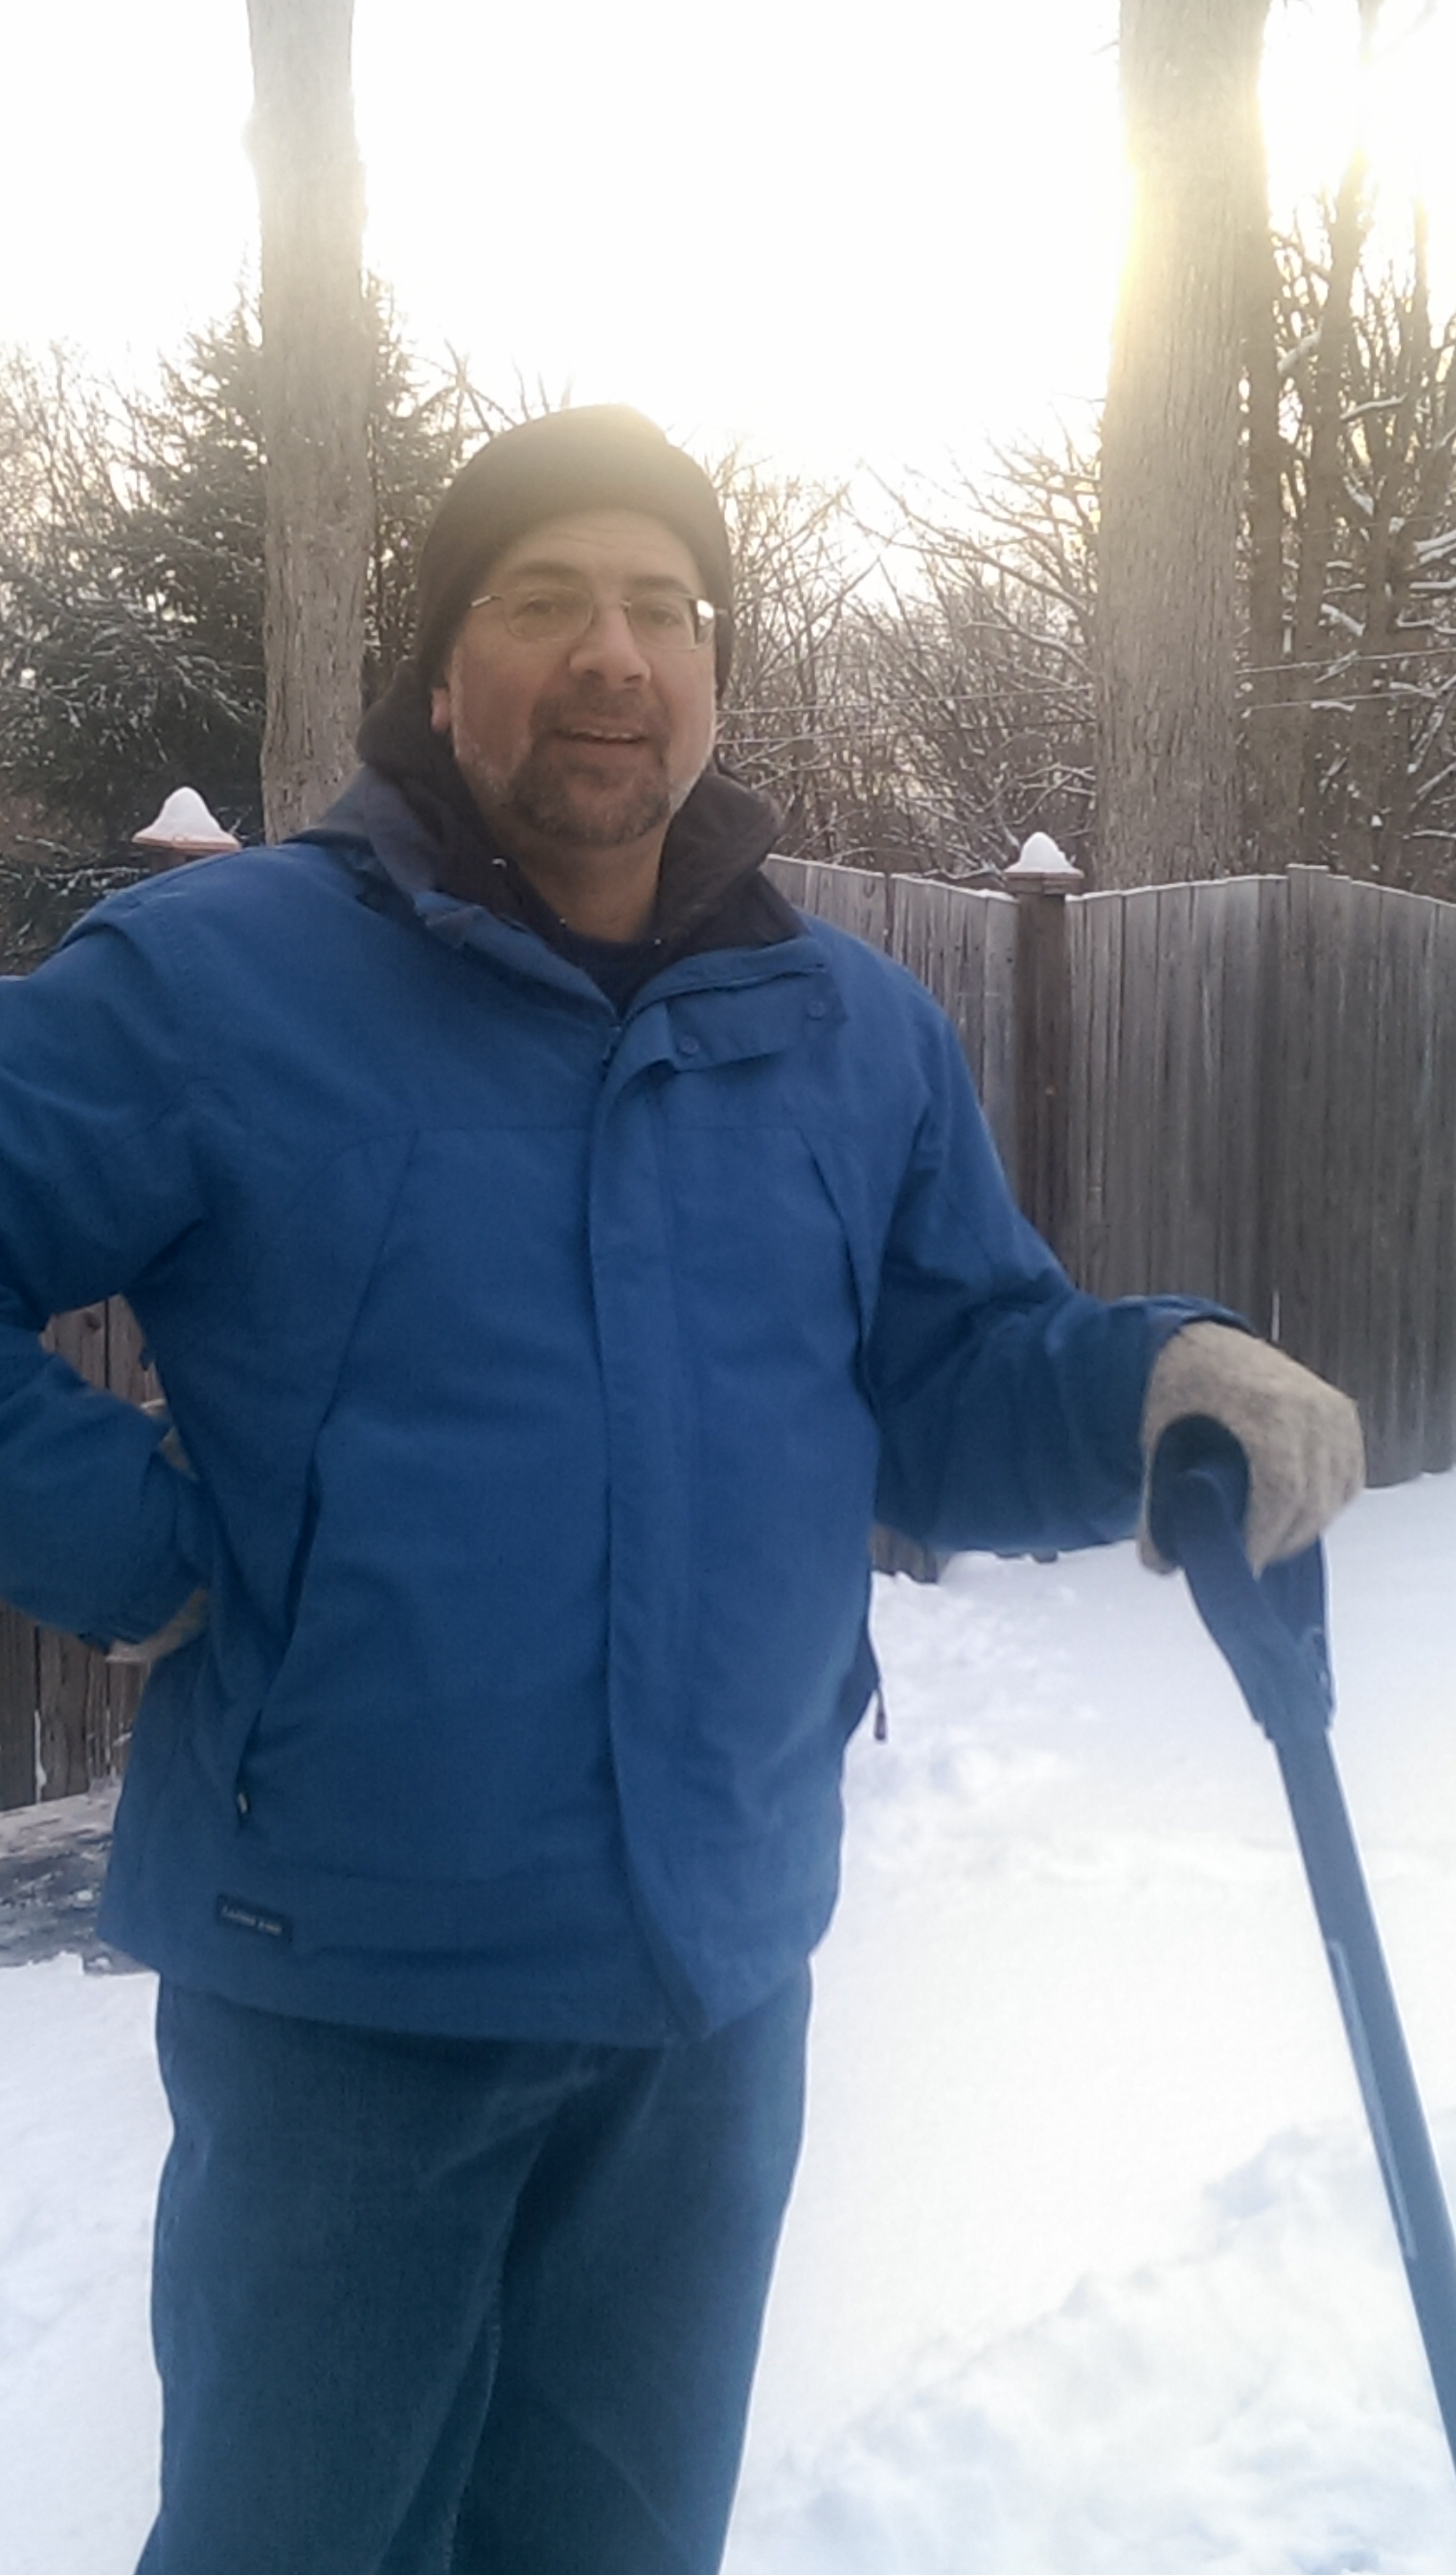 Dave Shoveling Snow Feb 2015